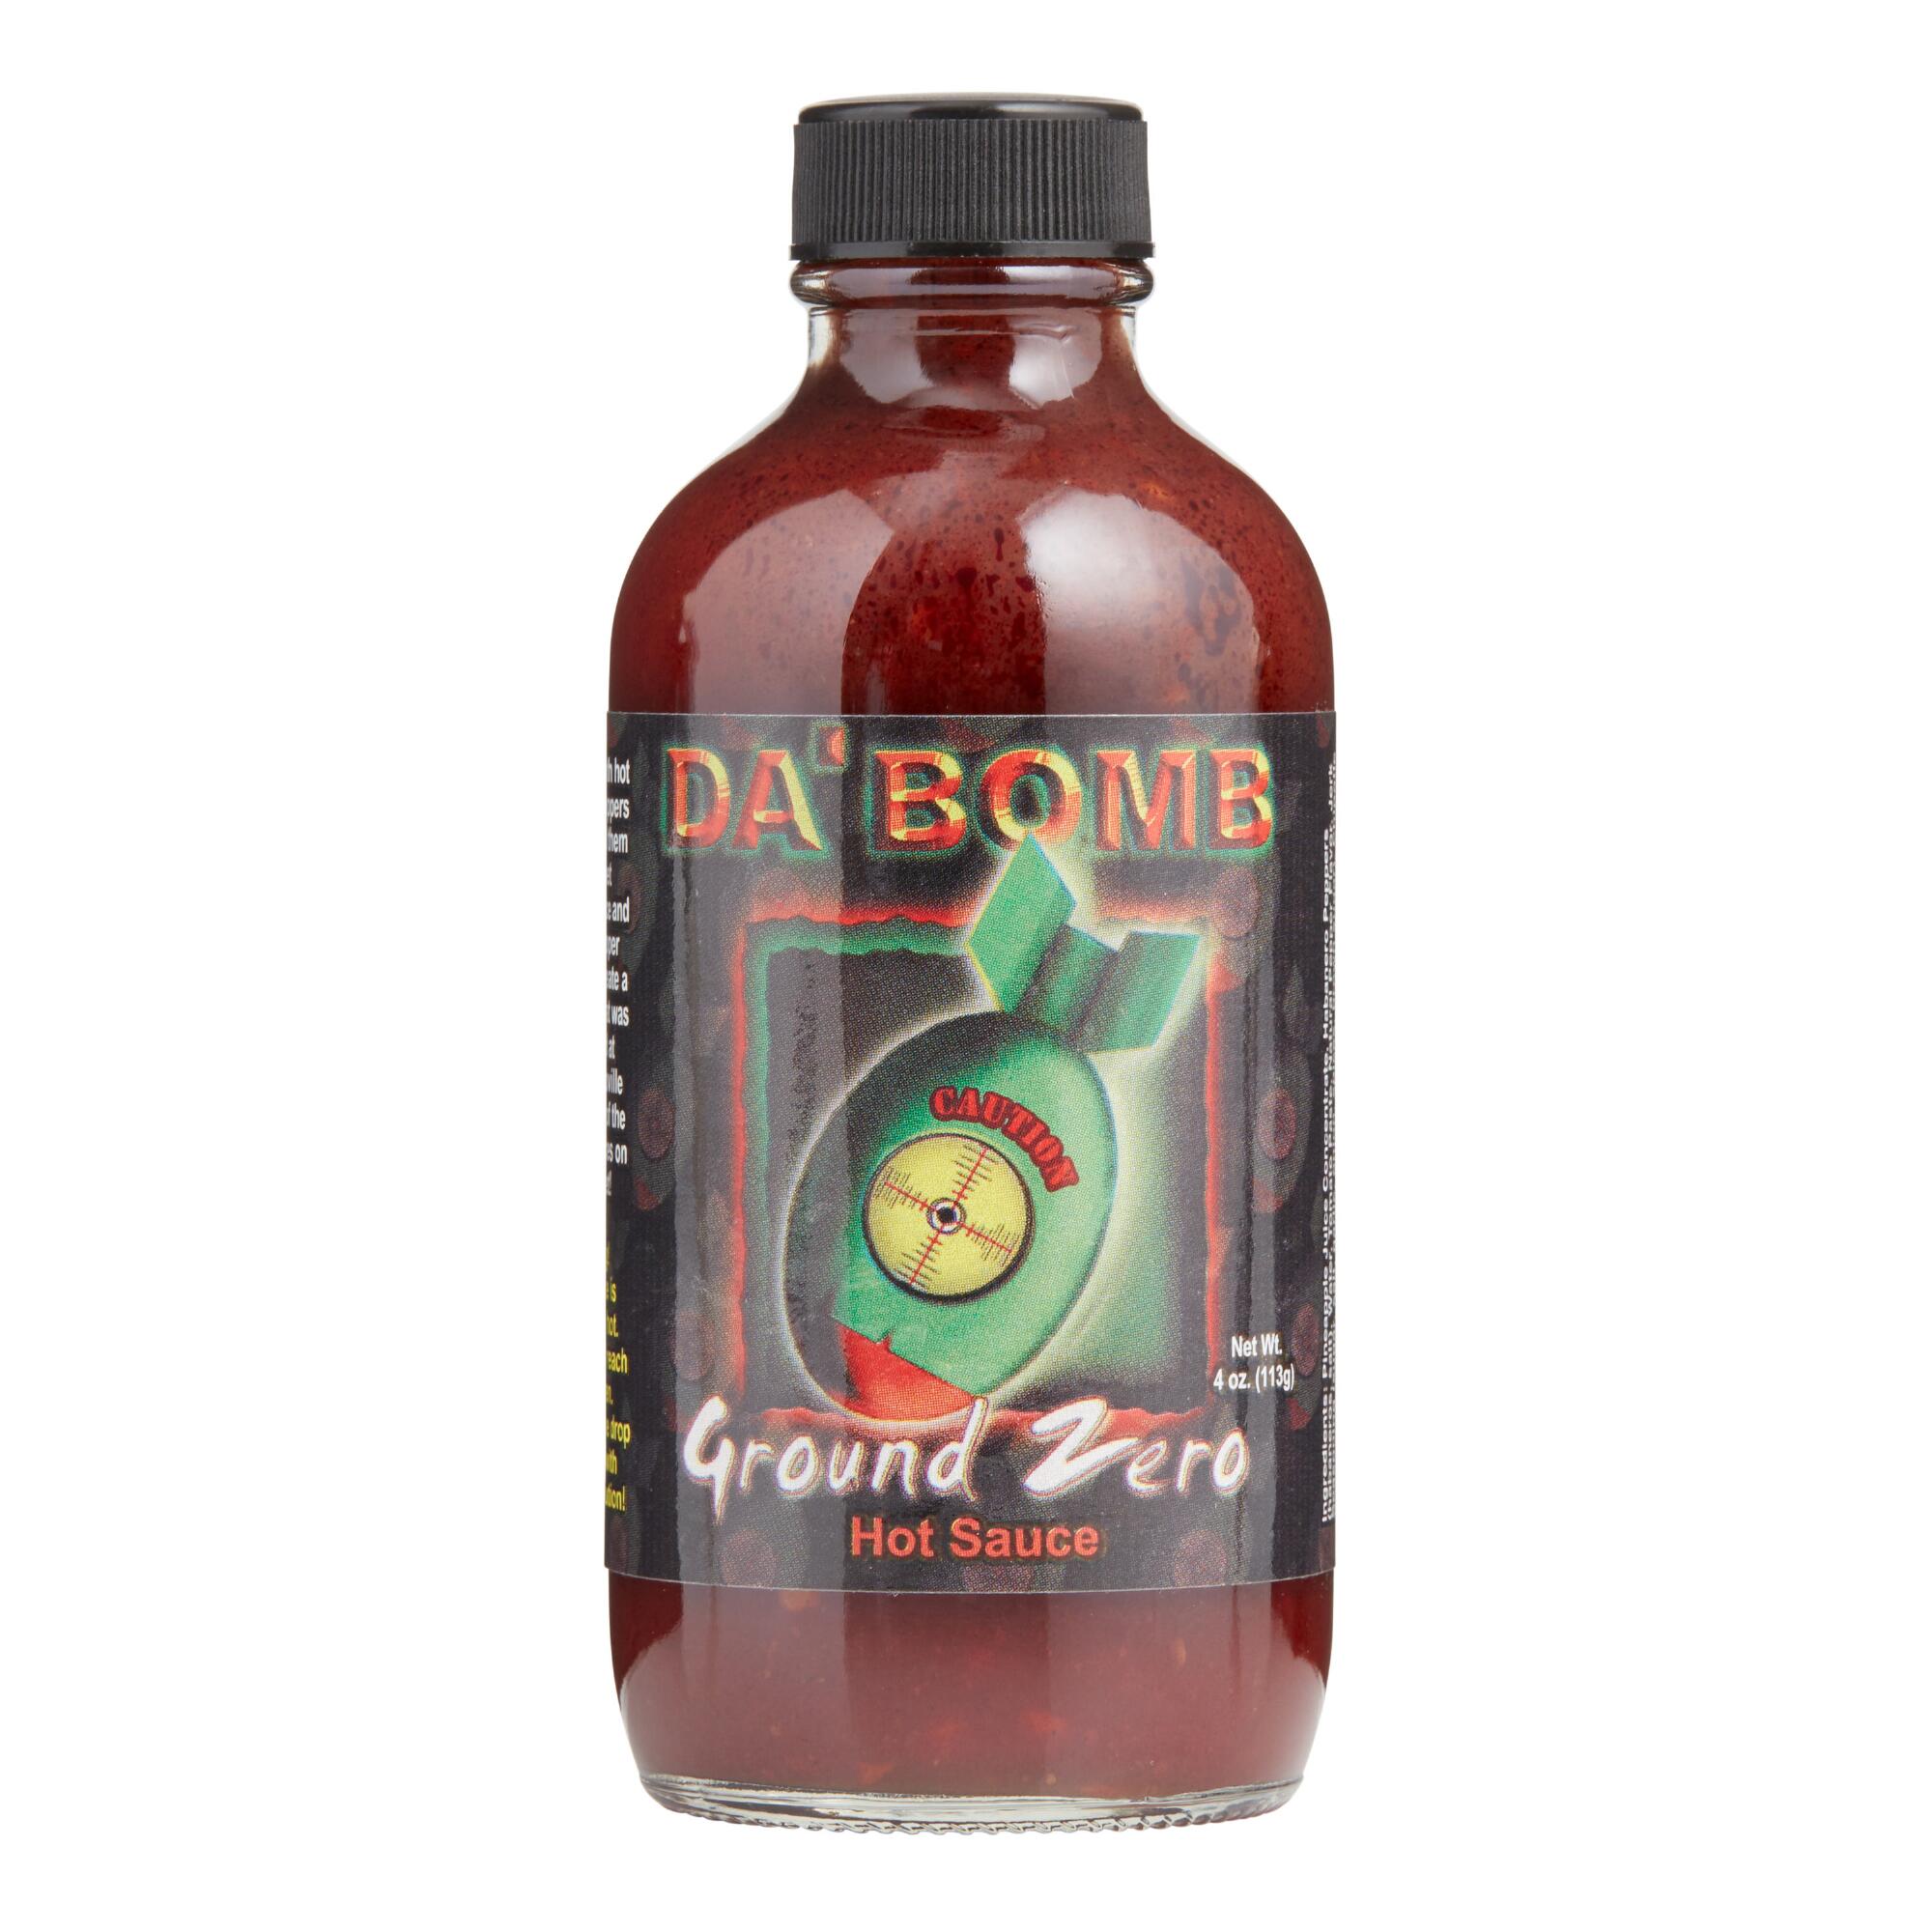 Da Bomb Ground Zero Hot Sauce by World Market